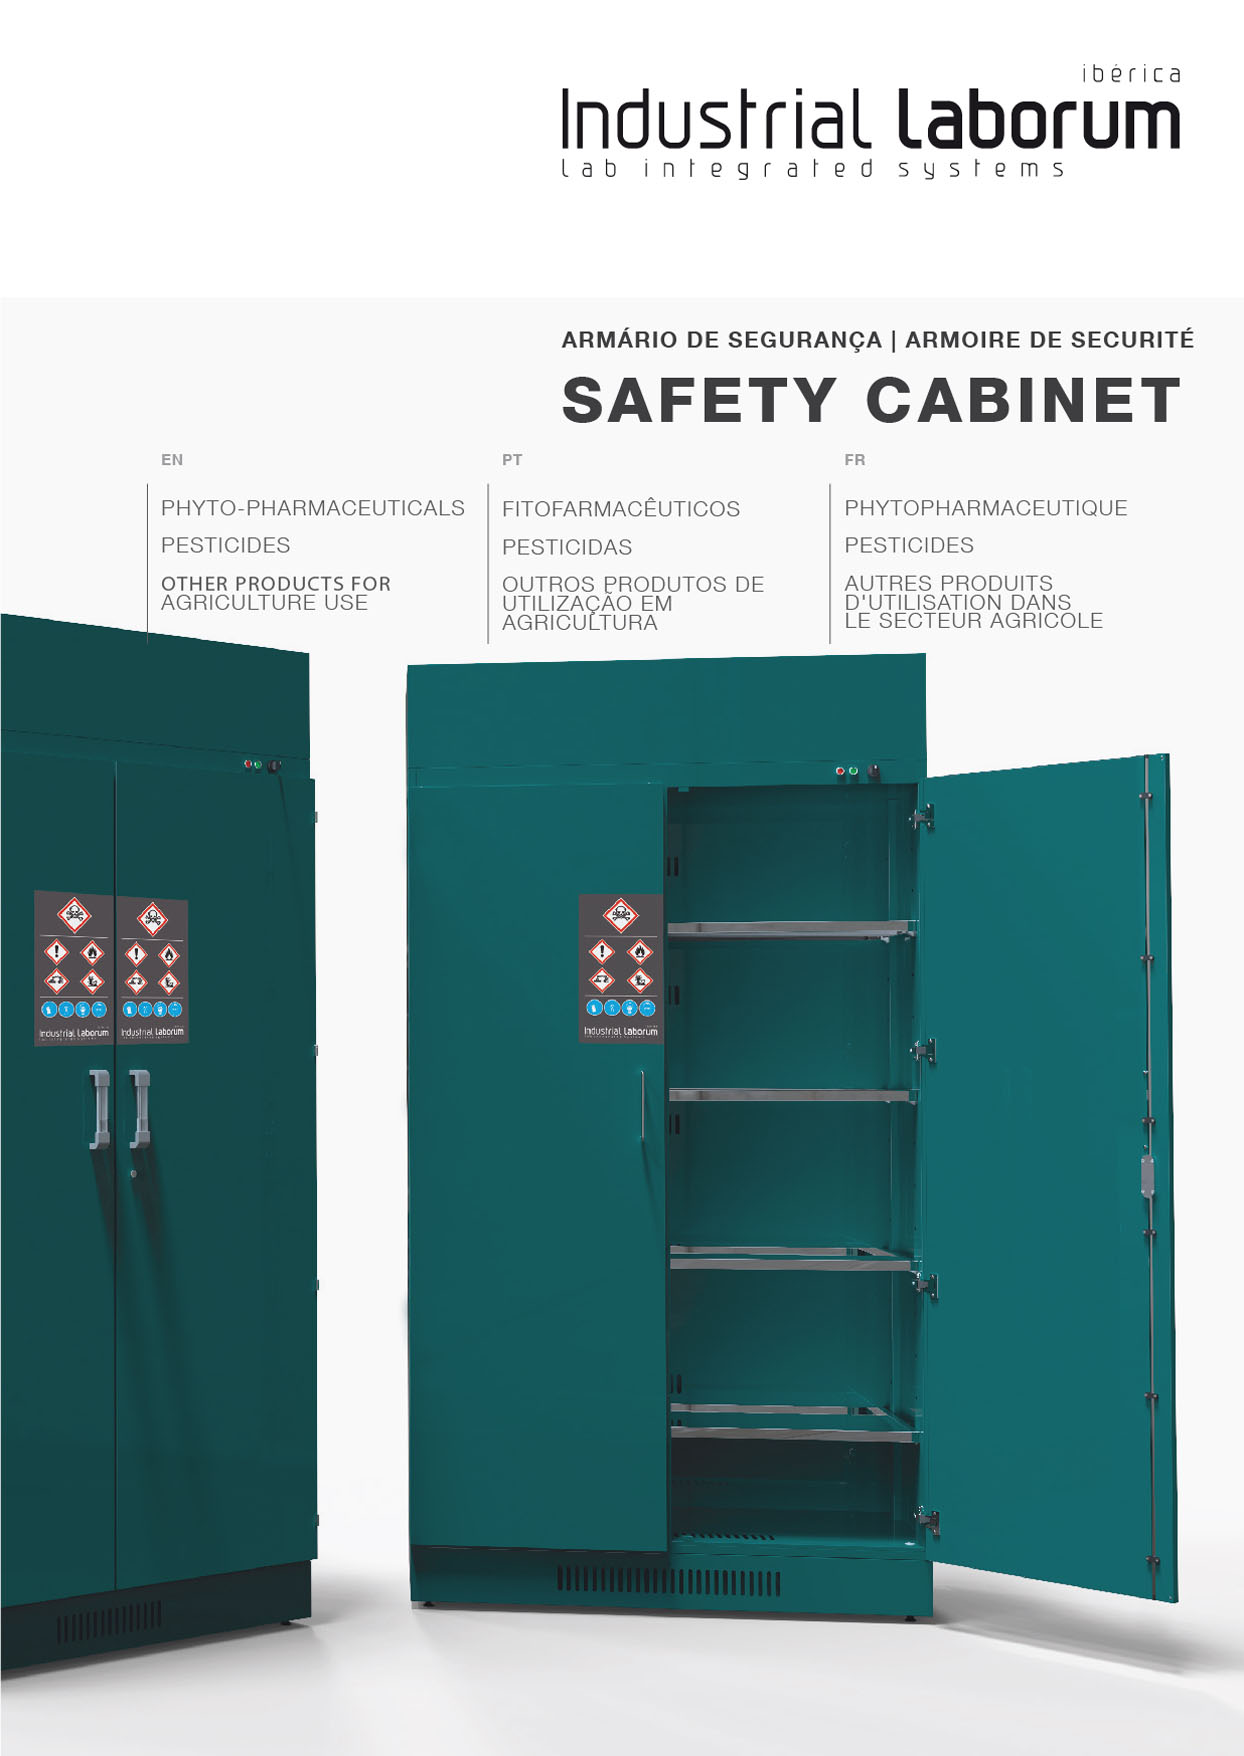 Industrial Safety Cabinets Catalog Laborum